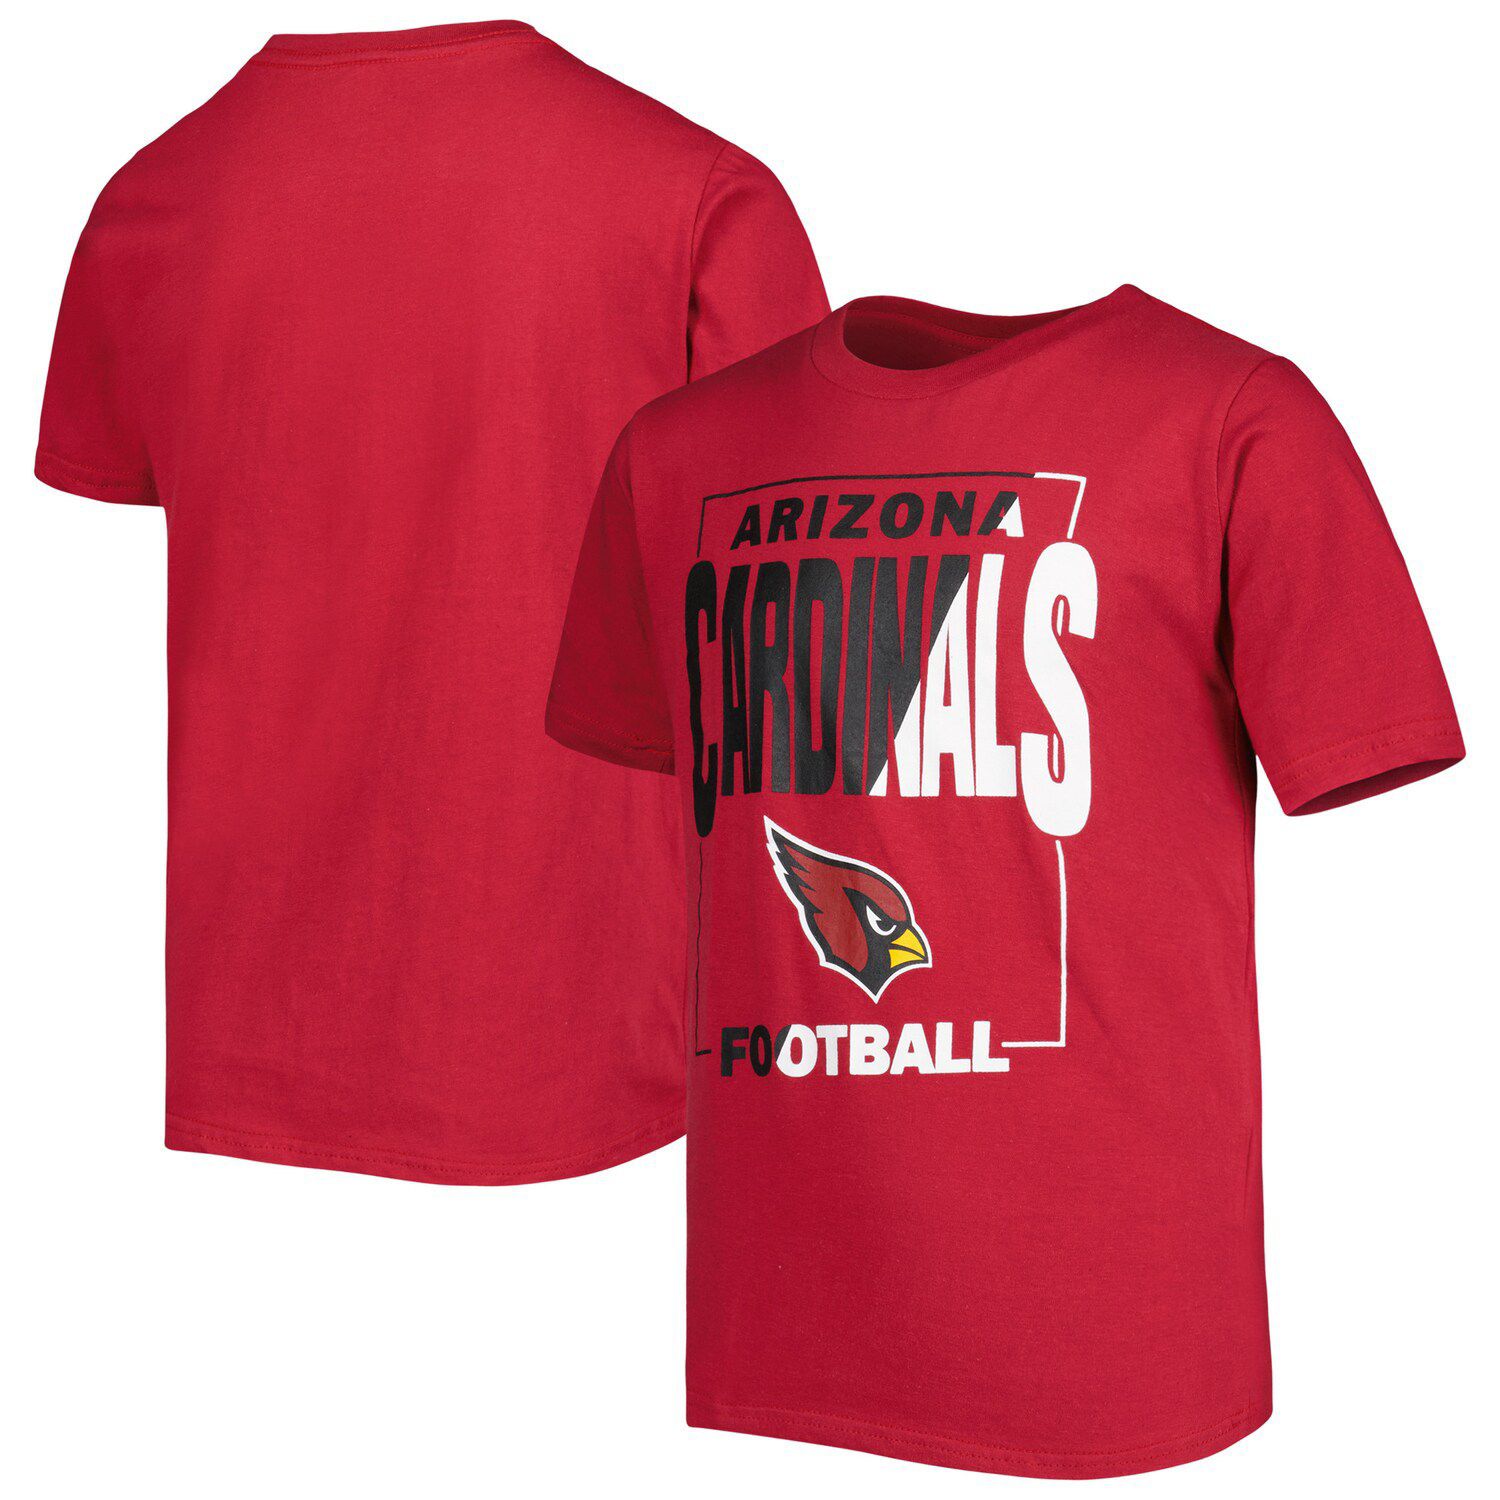 Outerstuff Youth Cardinal Arizona Cardinals Engaged T-Shirt Size: Large